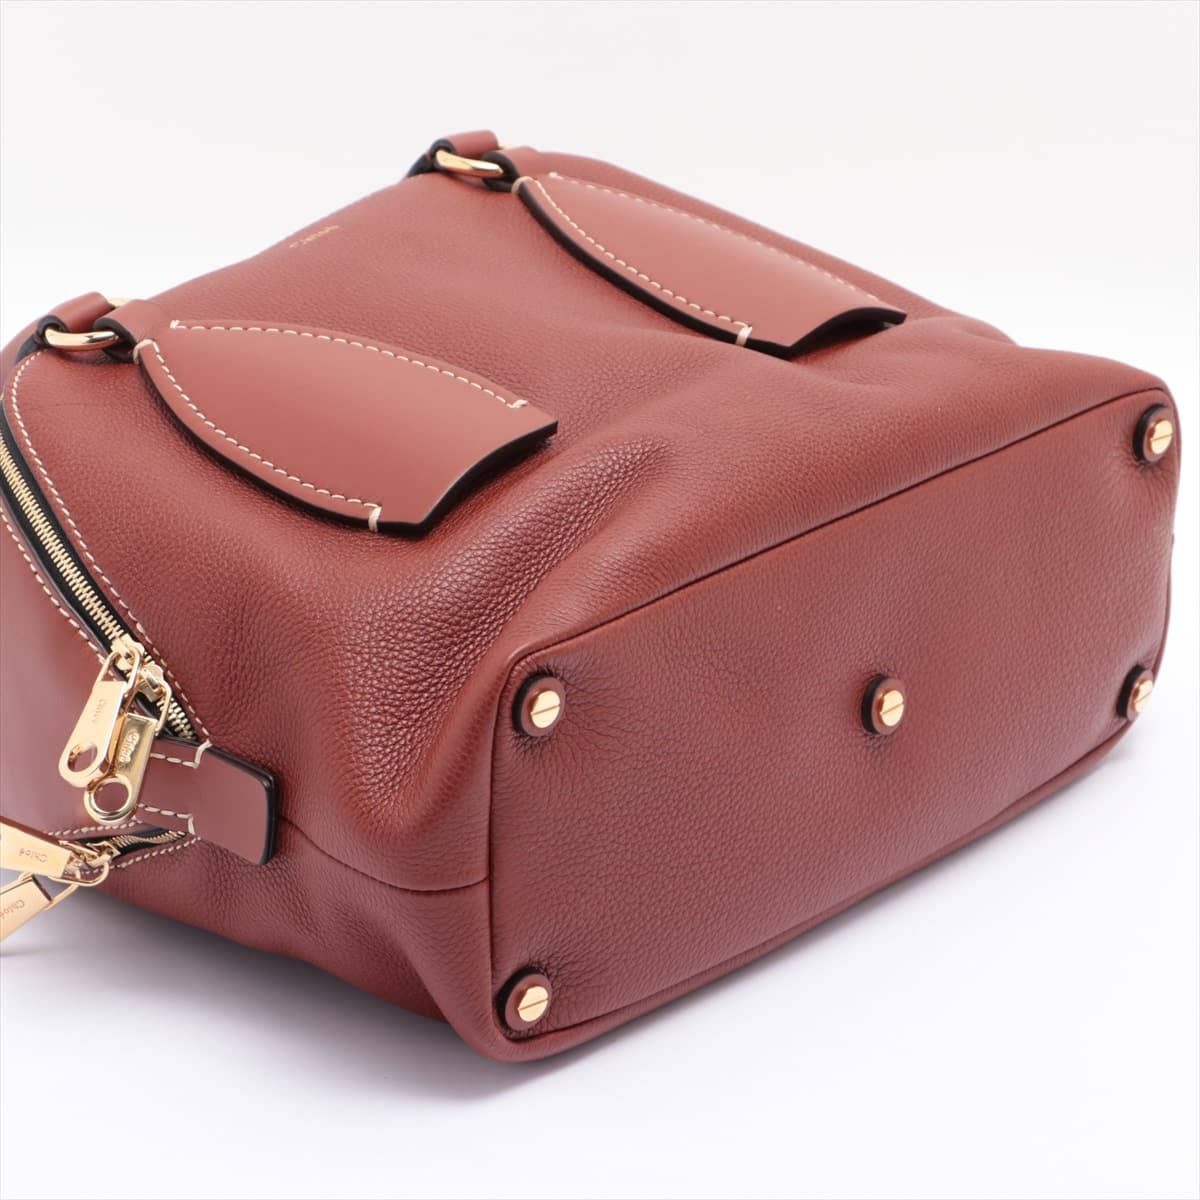 Chloe Dahlia Leather 2way handbag Brown